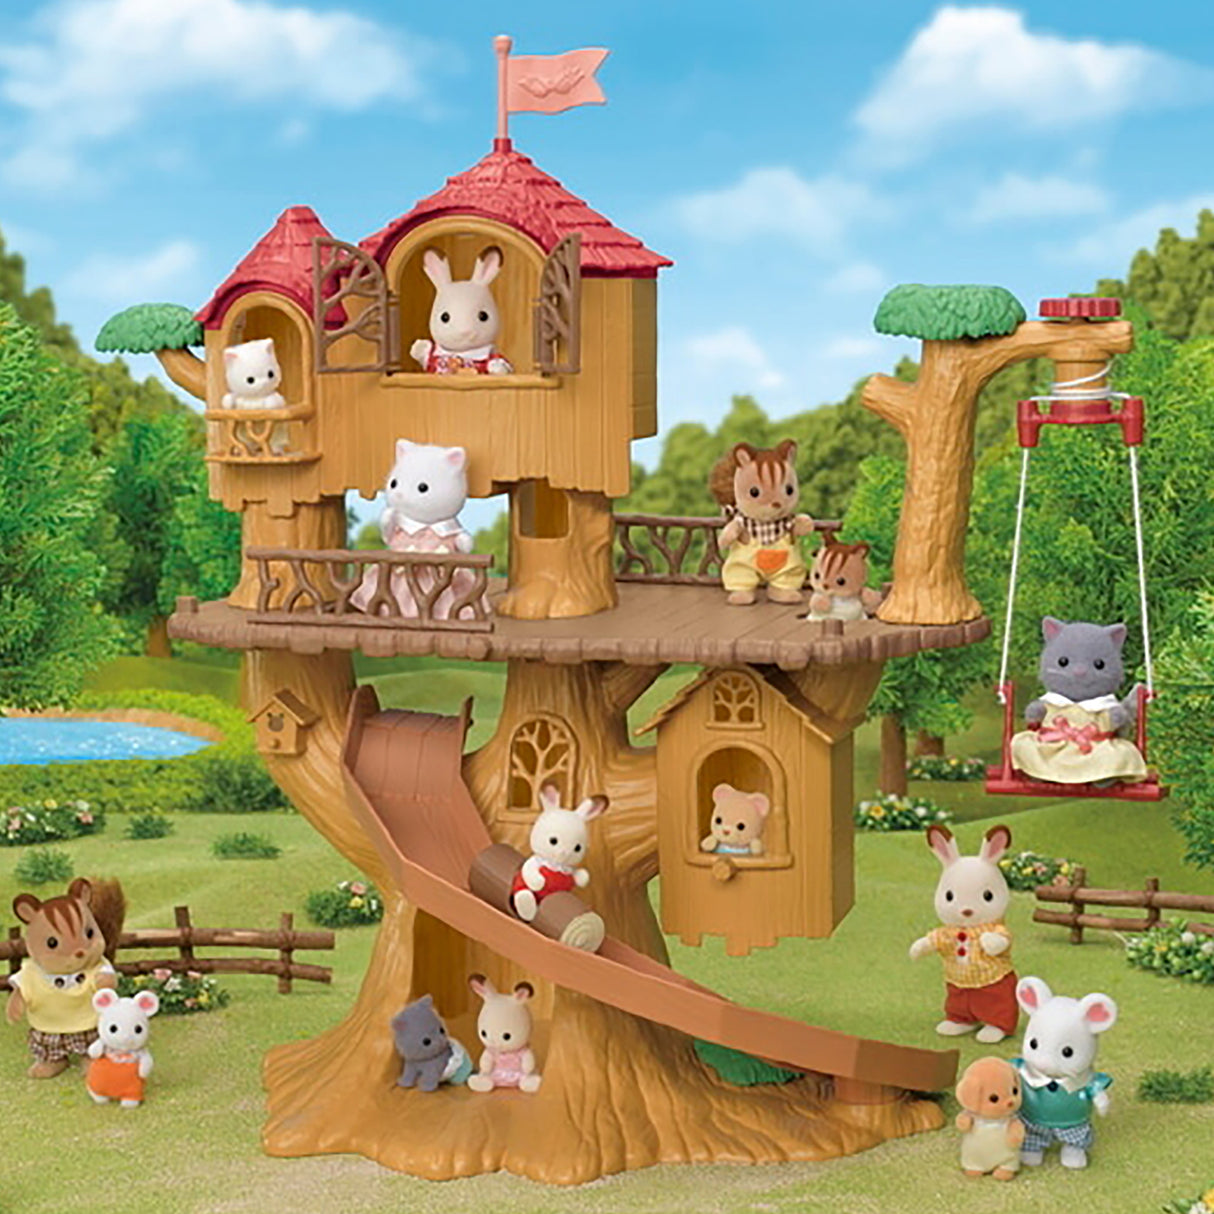 Sylvanian Families - Adventure Tree House